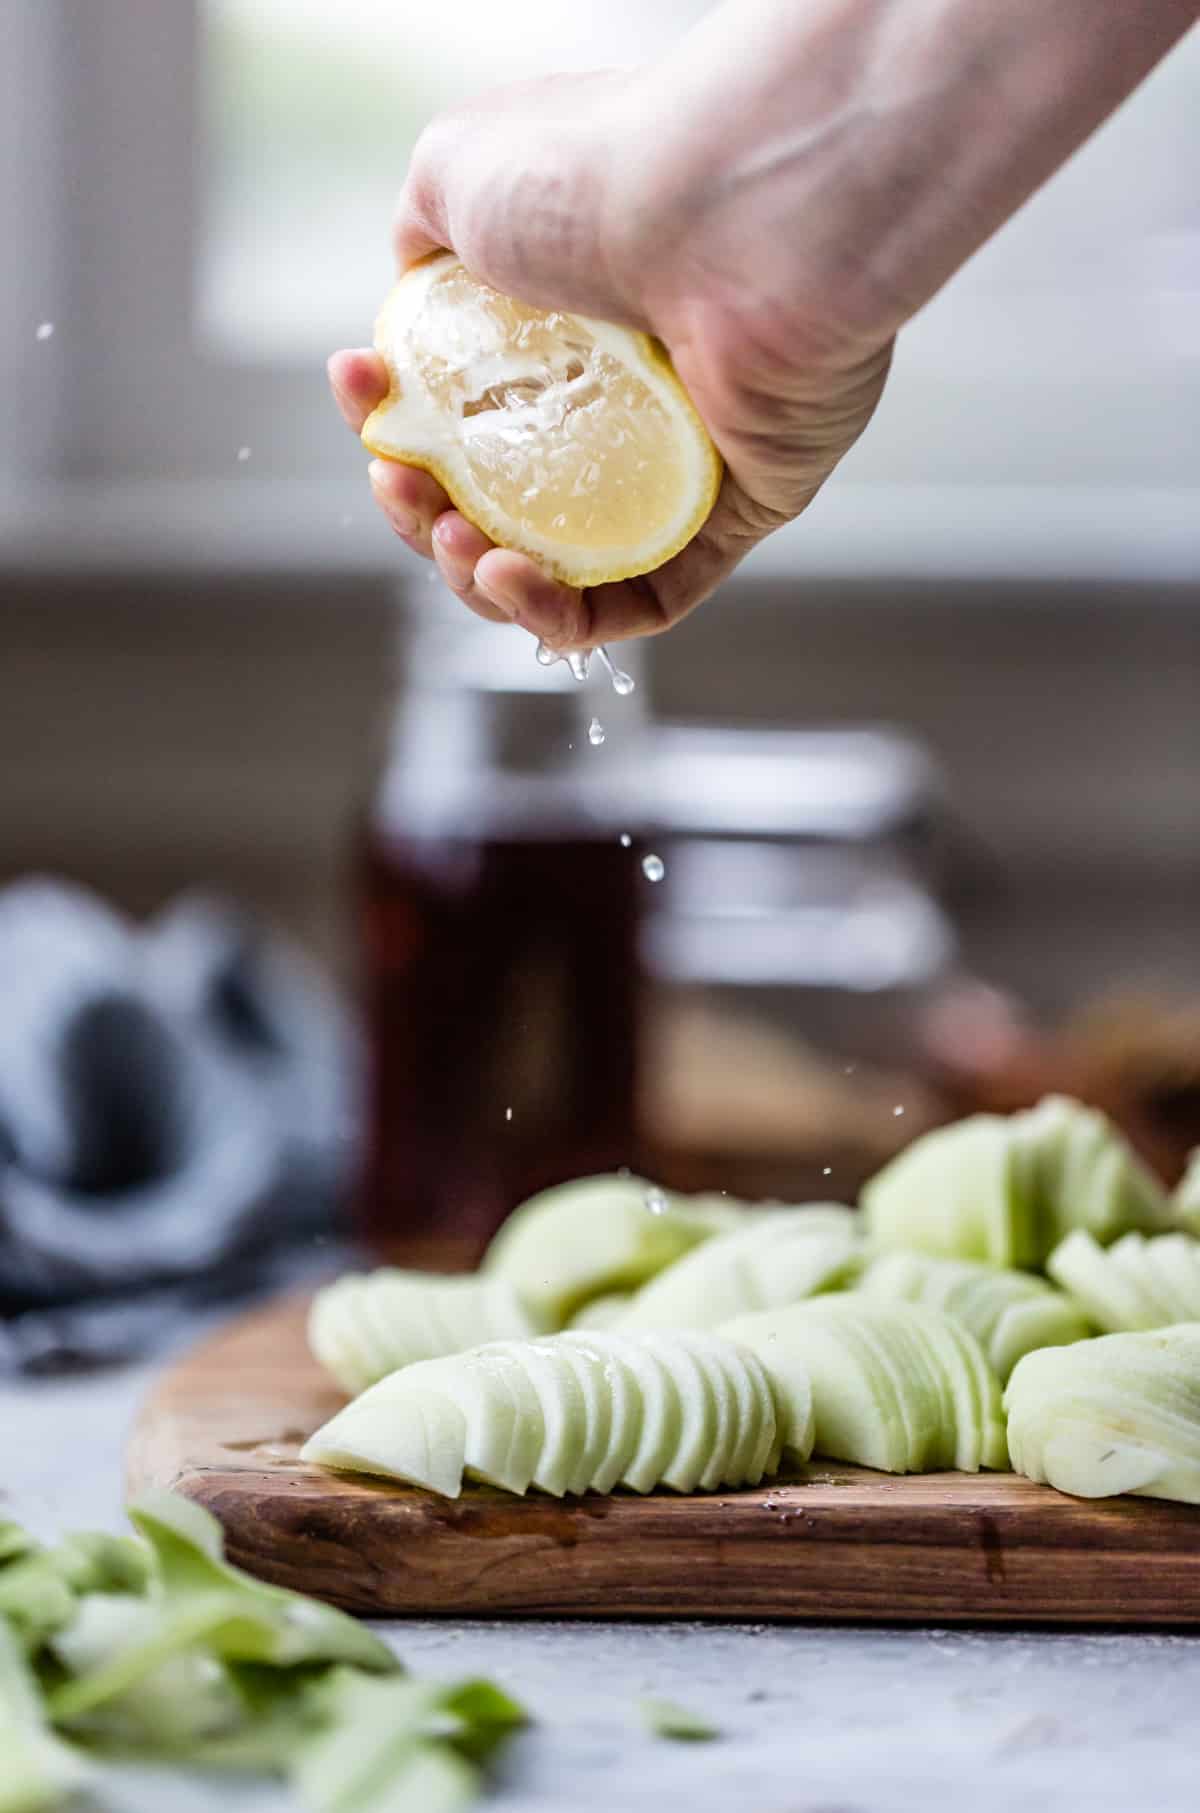 squeezing lemon juice on apple slices 